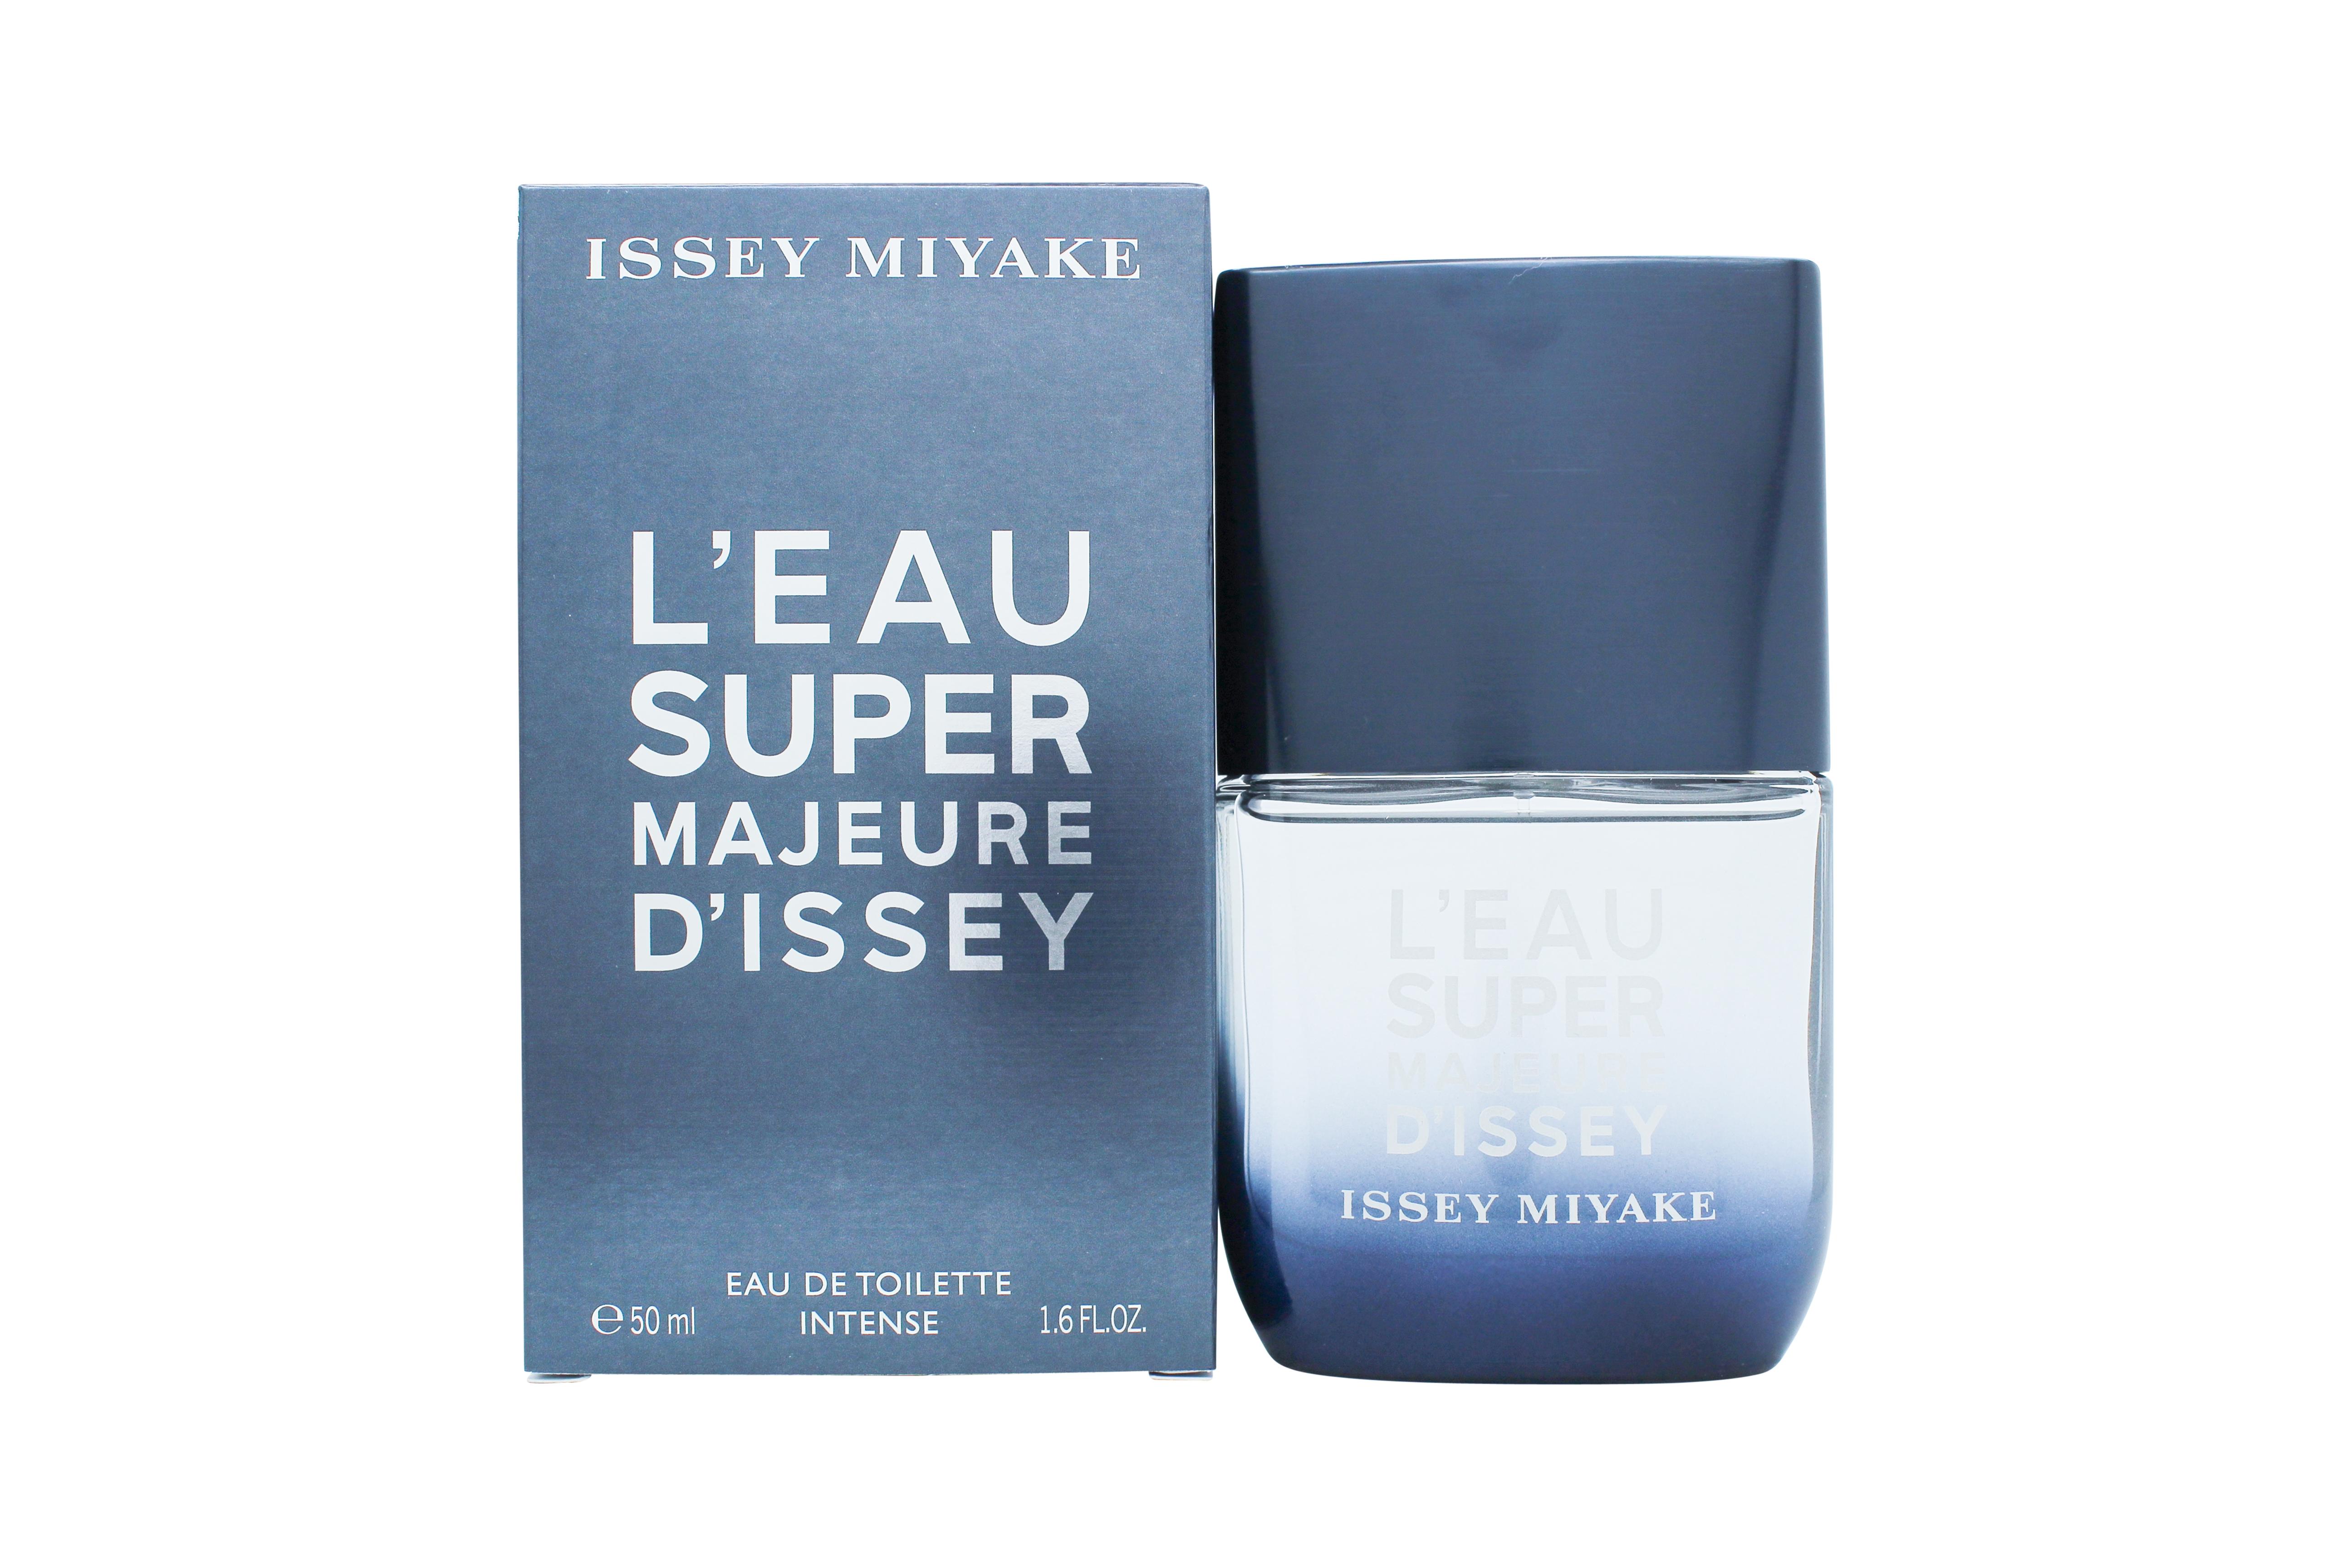 Issey Miyake L'Eau Super Majeure d'Issey Eau de Toilette 50ml Spray